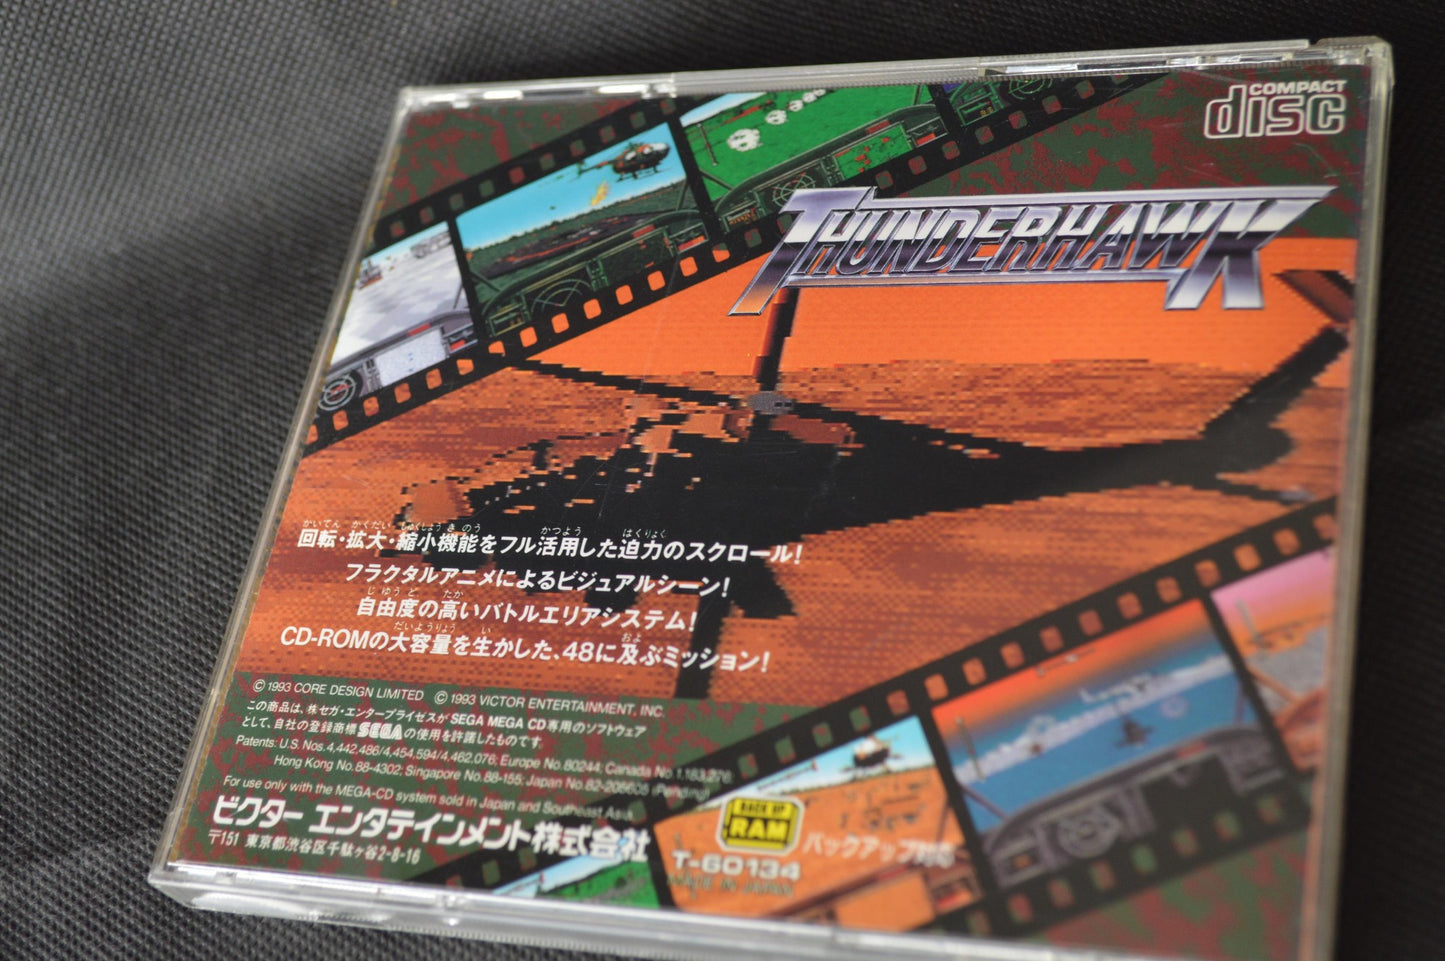 Thuder Hawk MEGA CD MCD game Disk, Manual, Box set, Working -f1114-